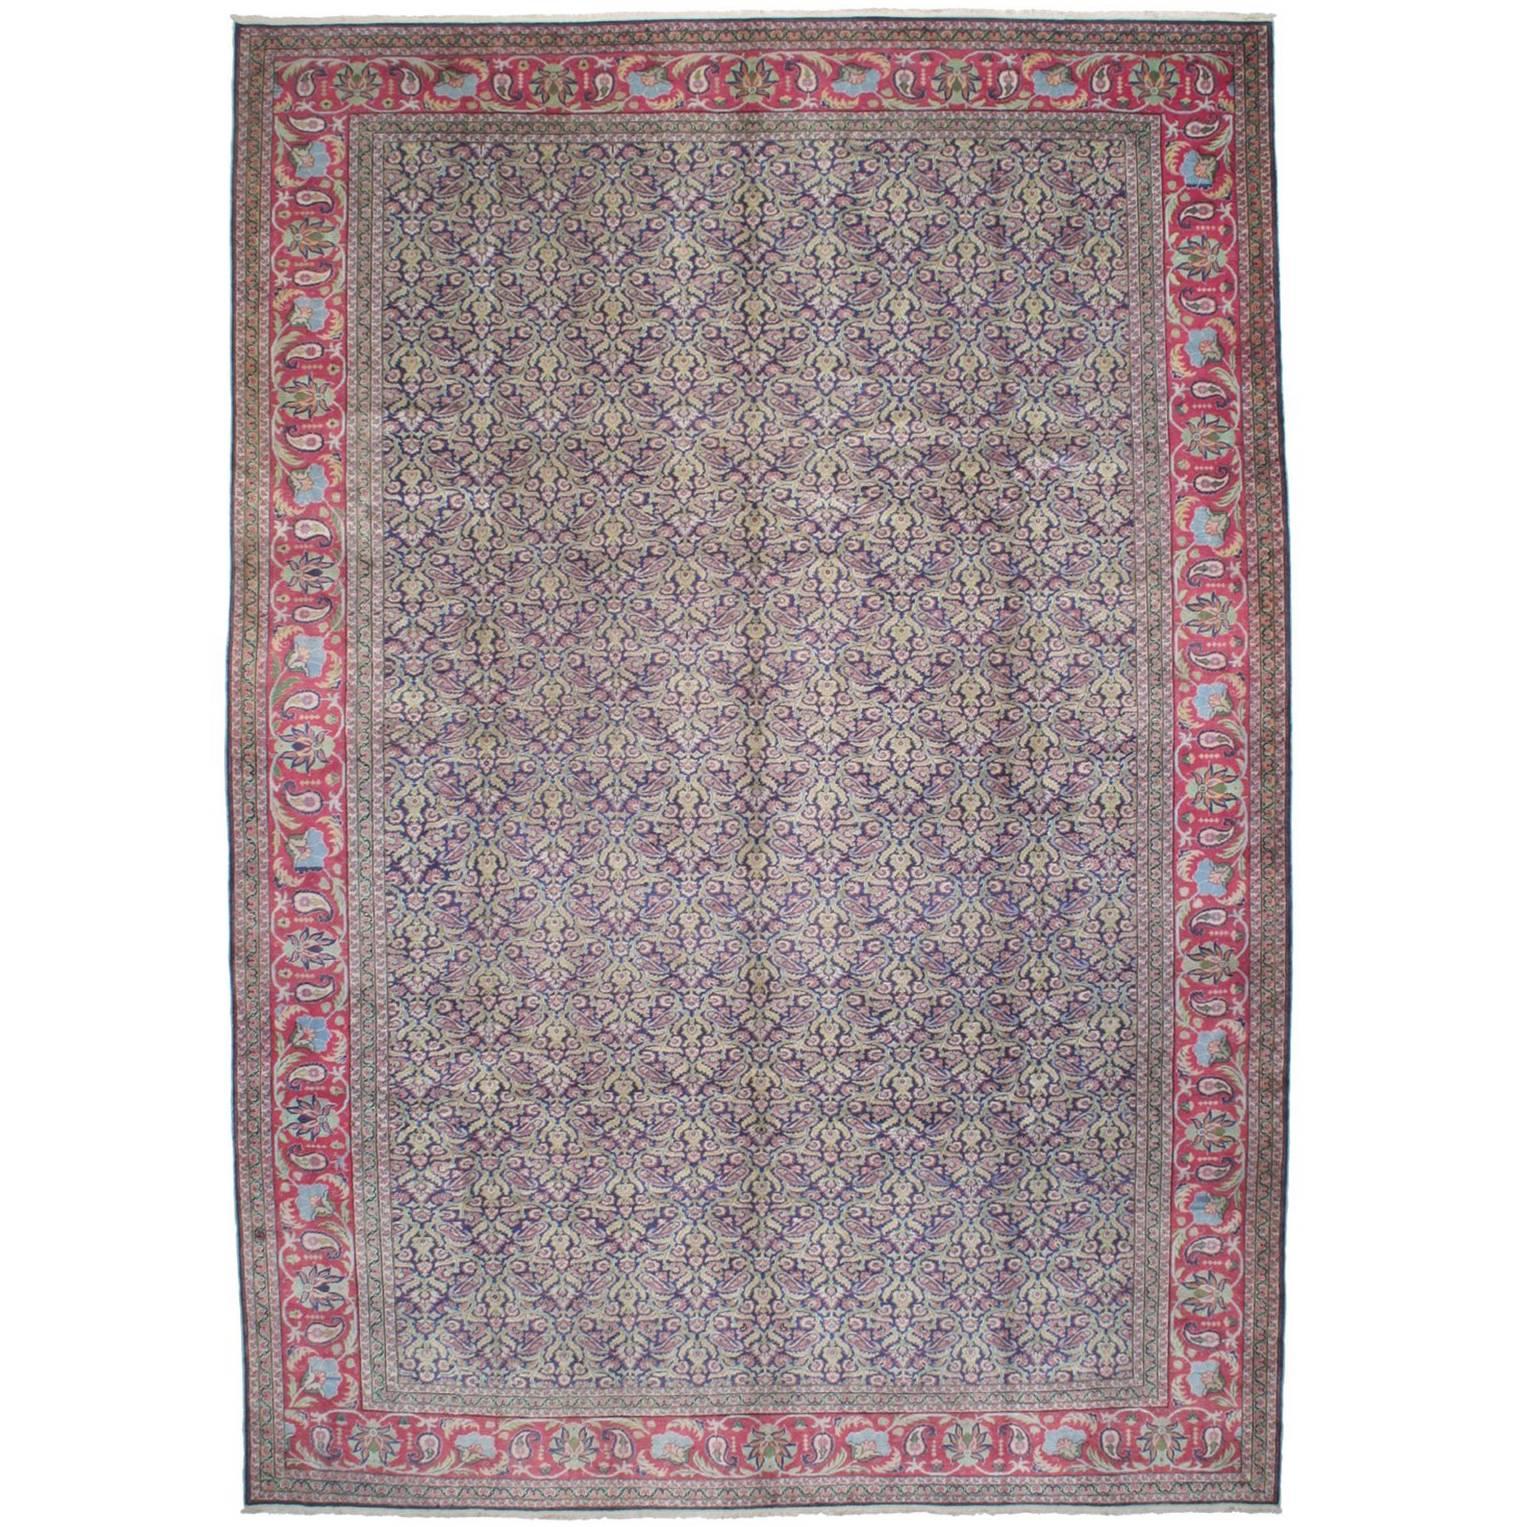 Kayseri Teppich im Vintage-Stil